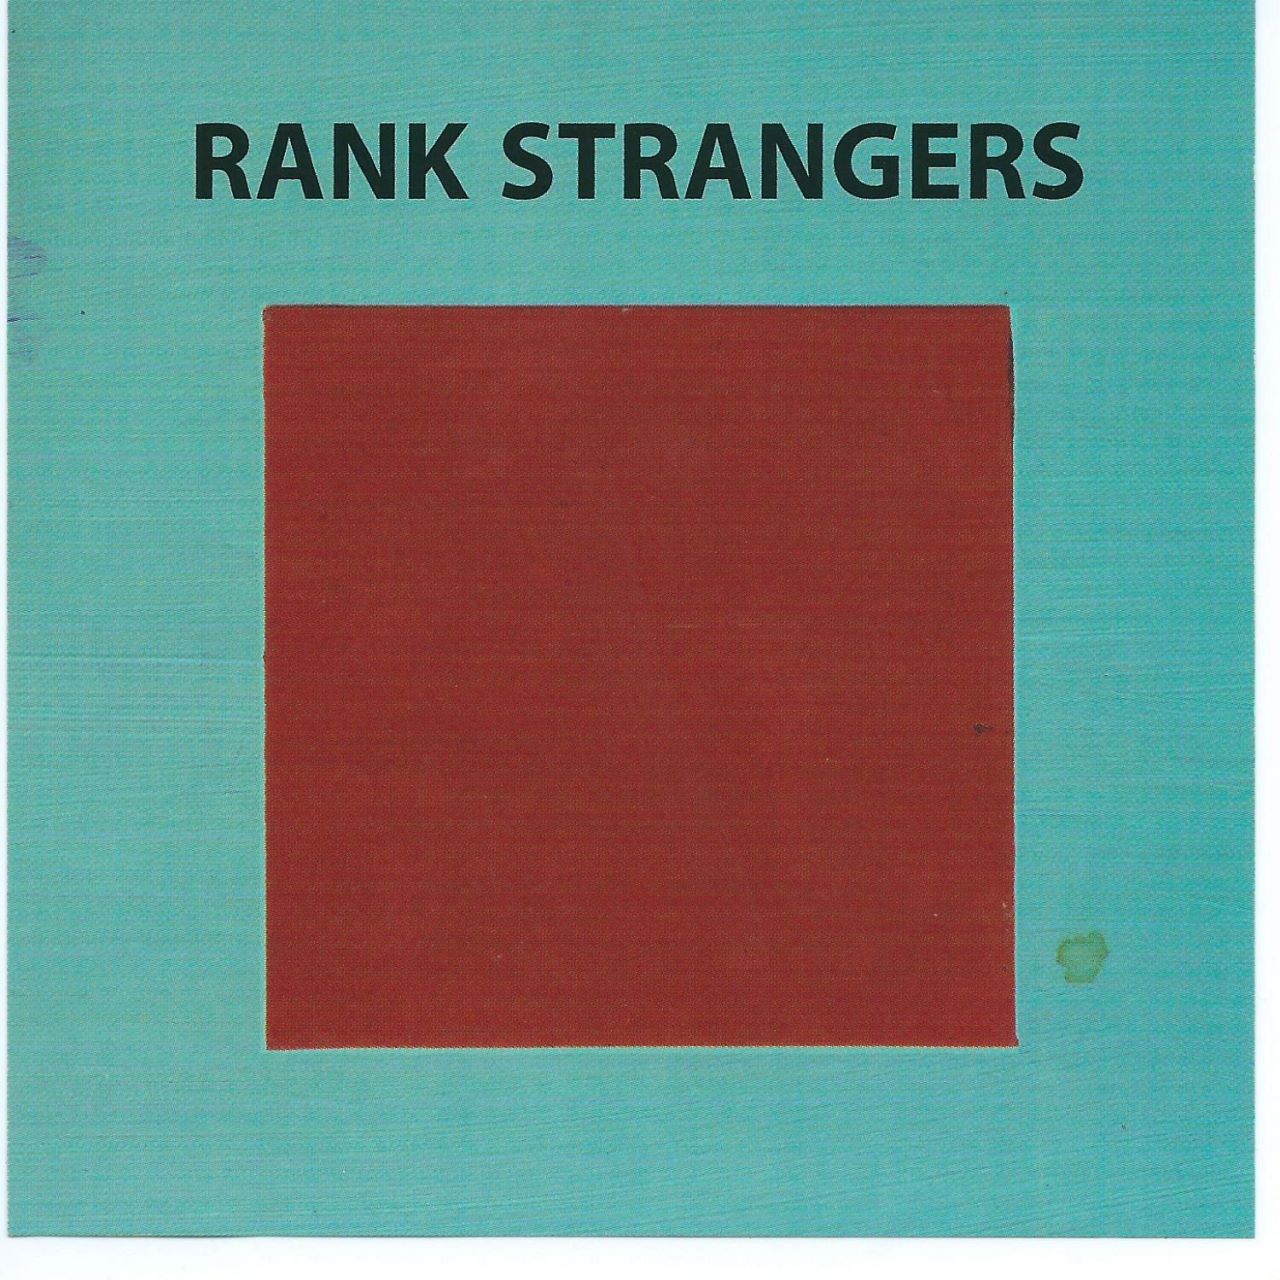 Rank Strangers - Rank Strangers cover album